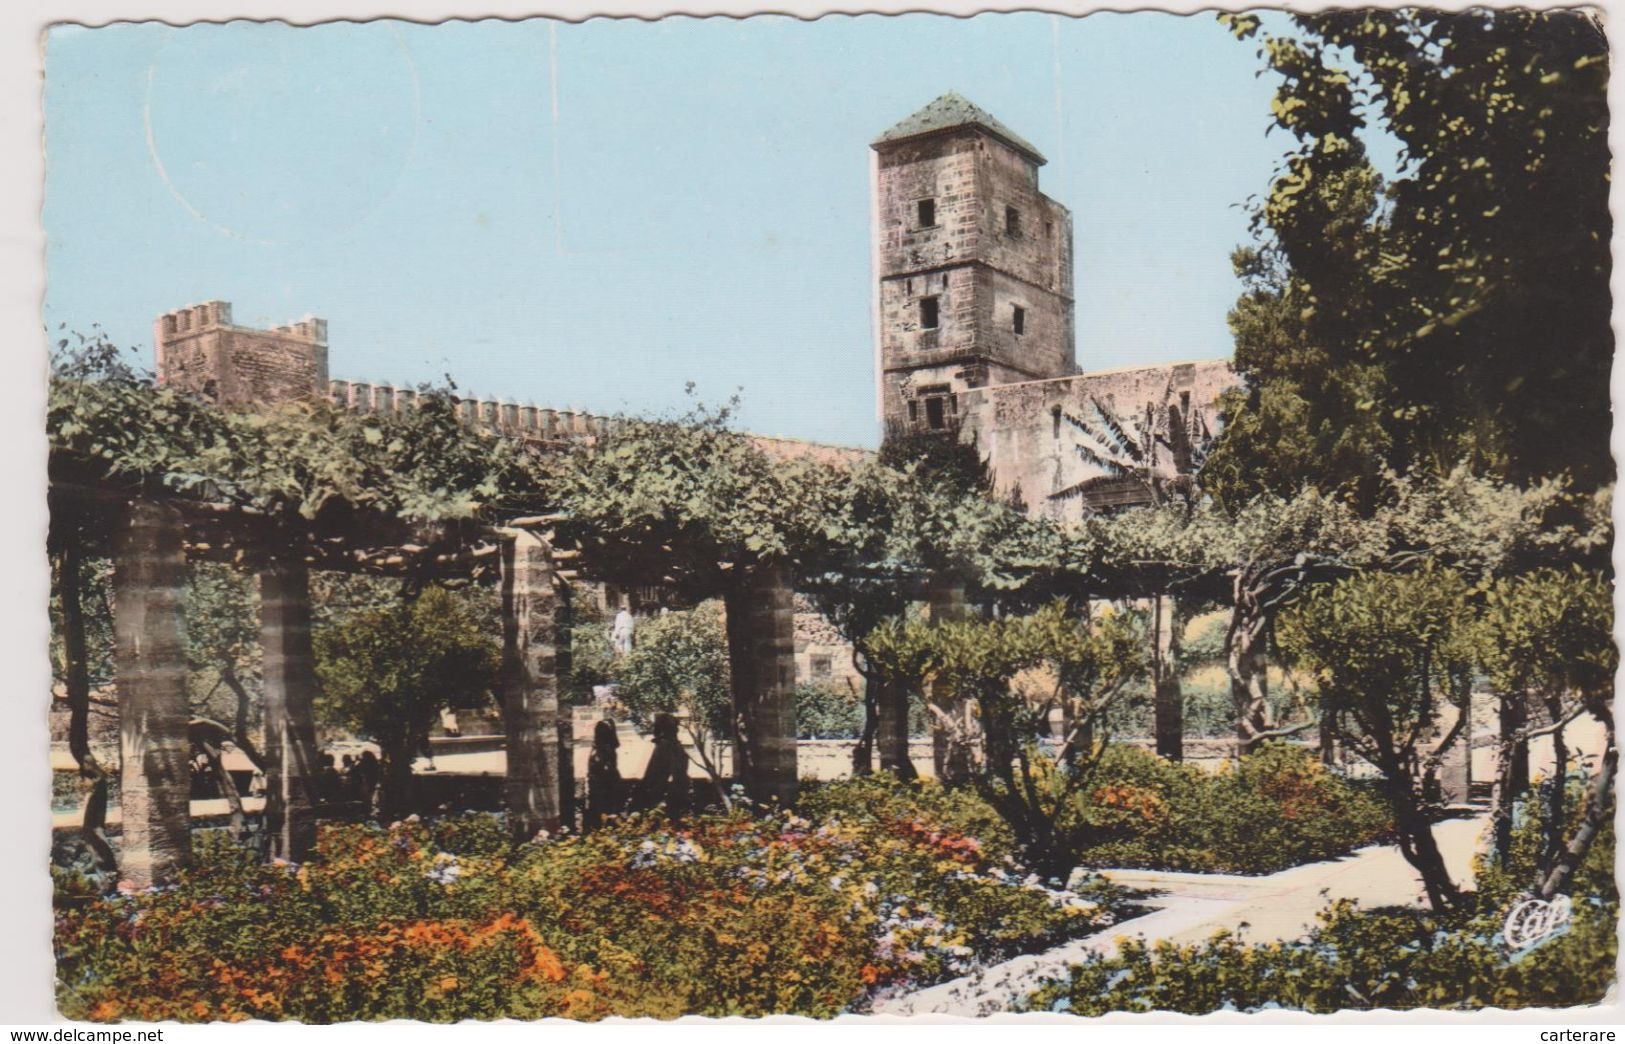 MAROC,rabat,le Jardin Des Oudaias,la Pergola,en 1965,avec Tampon Et Beau Timbre,rare,afrique - Rabat